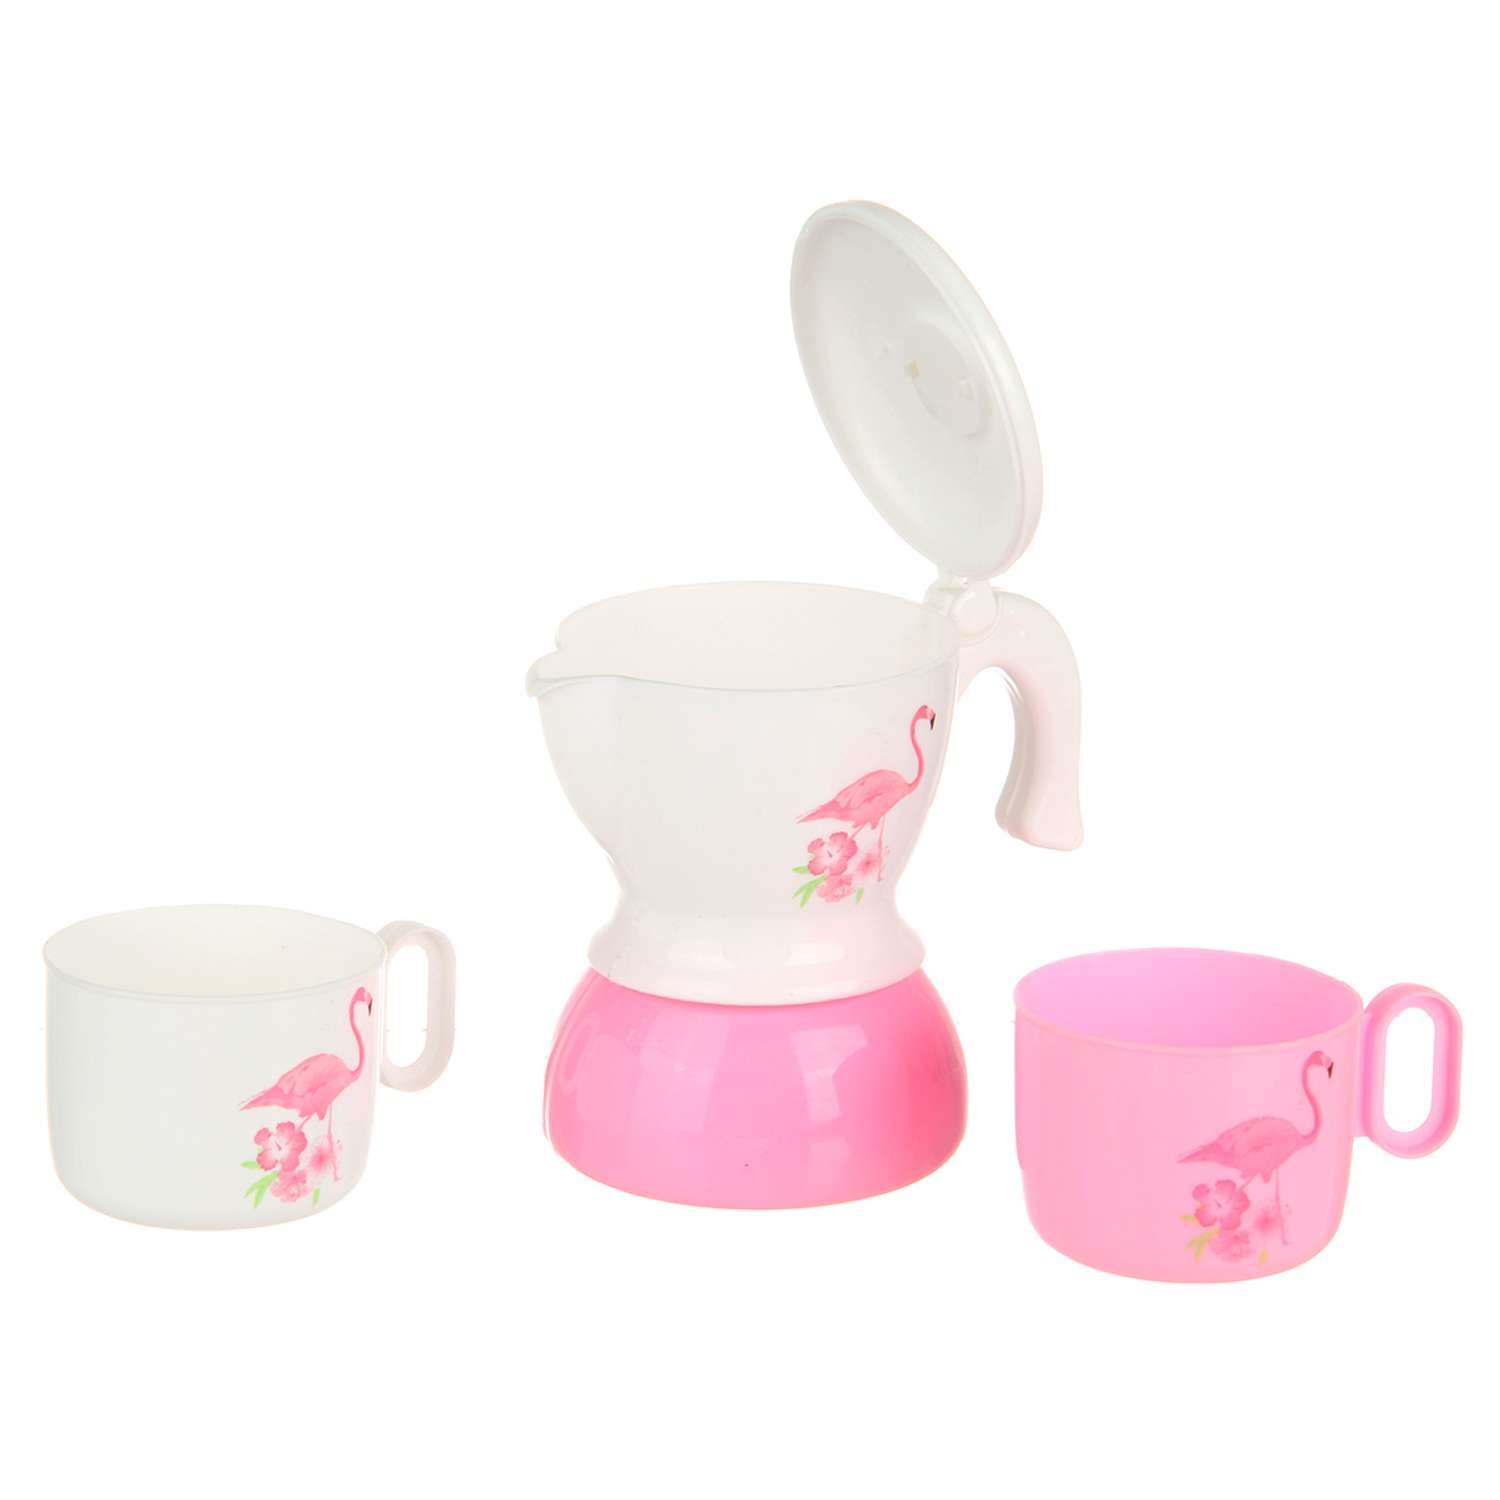 Детская посуда игрушечная Veld Co Фламинго 14 предметов - фото 7